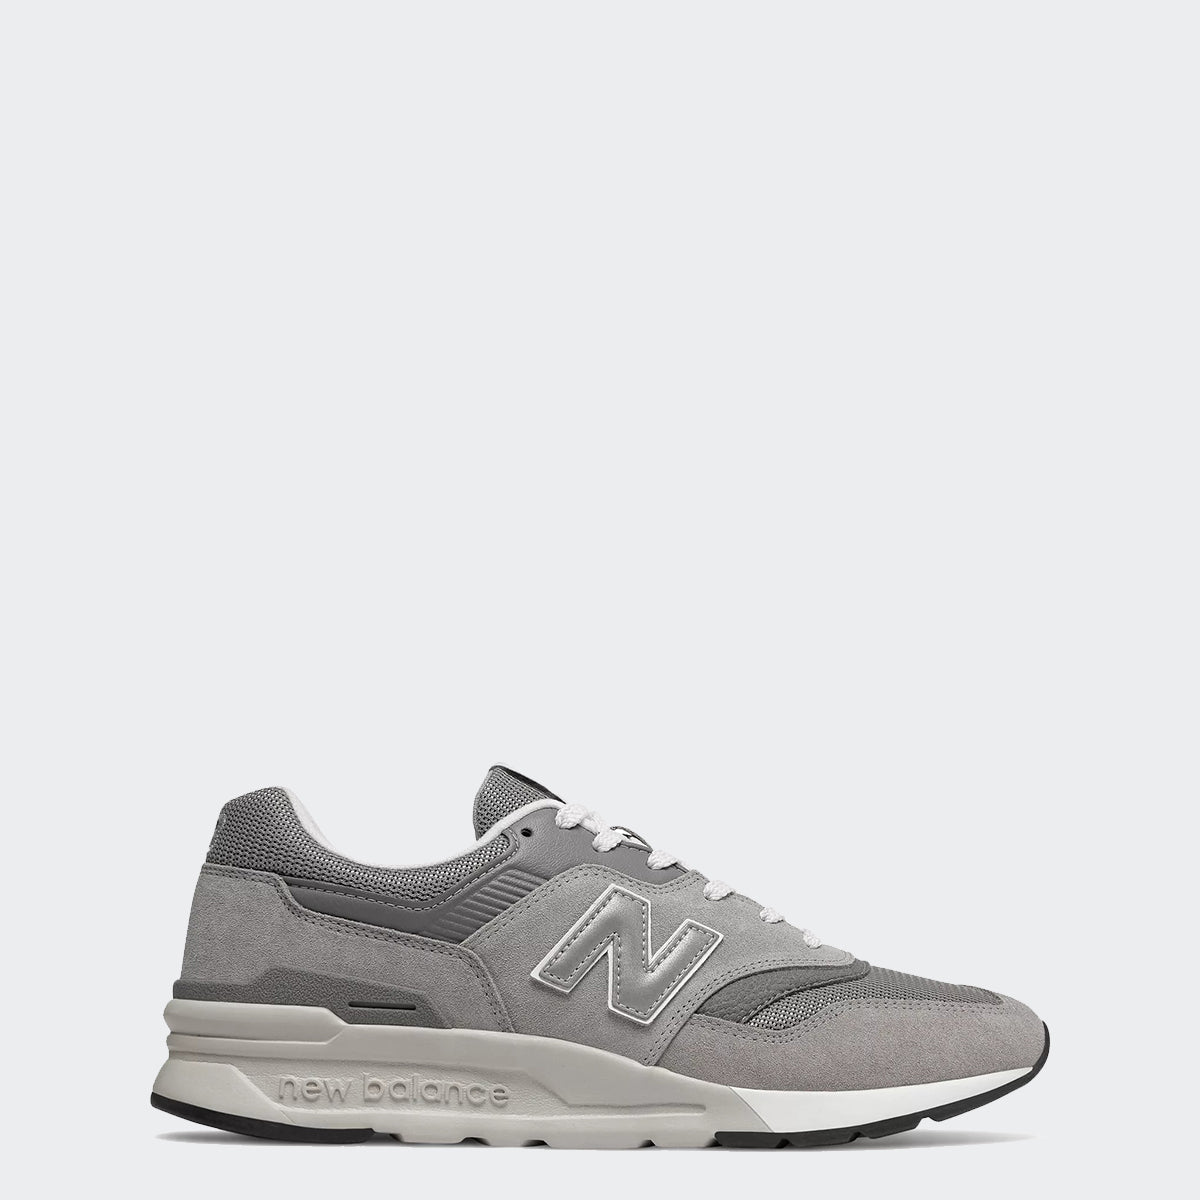 nb 997h grey